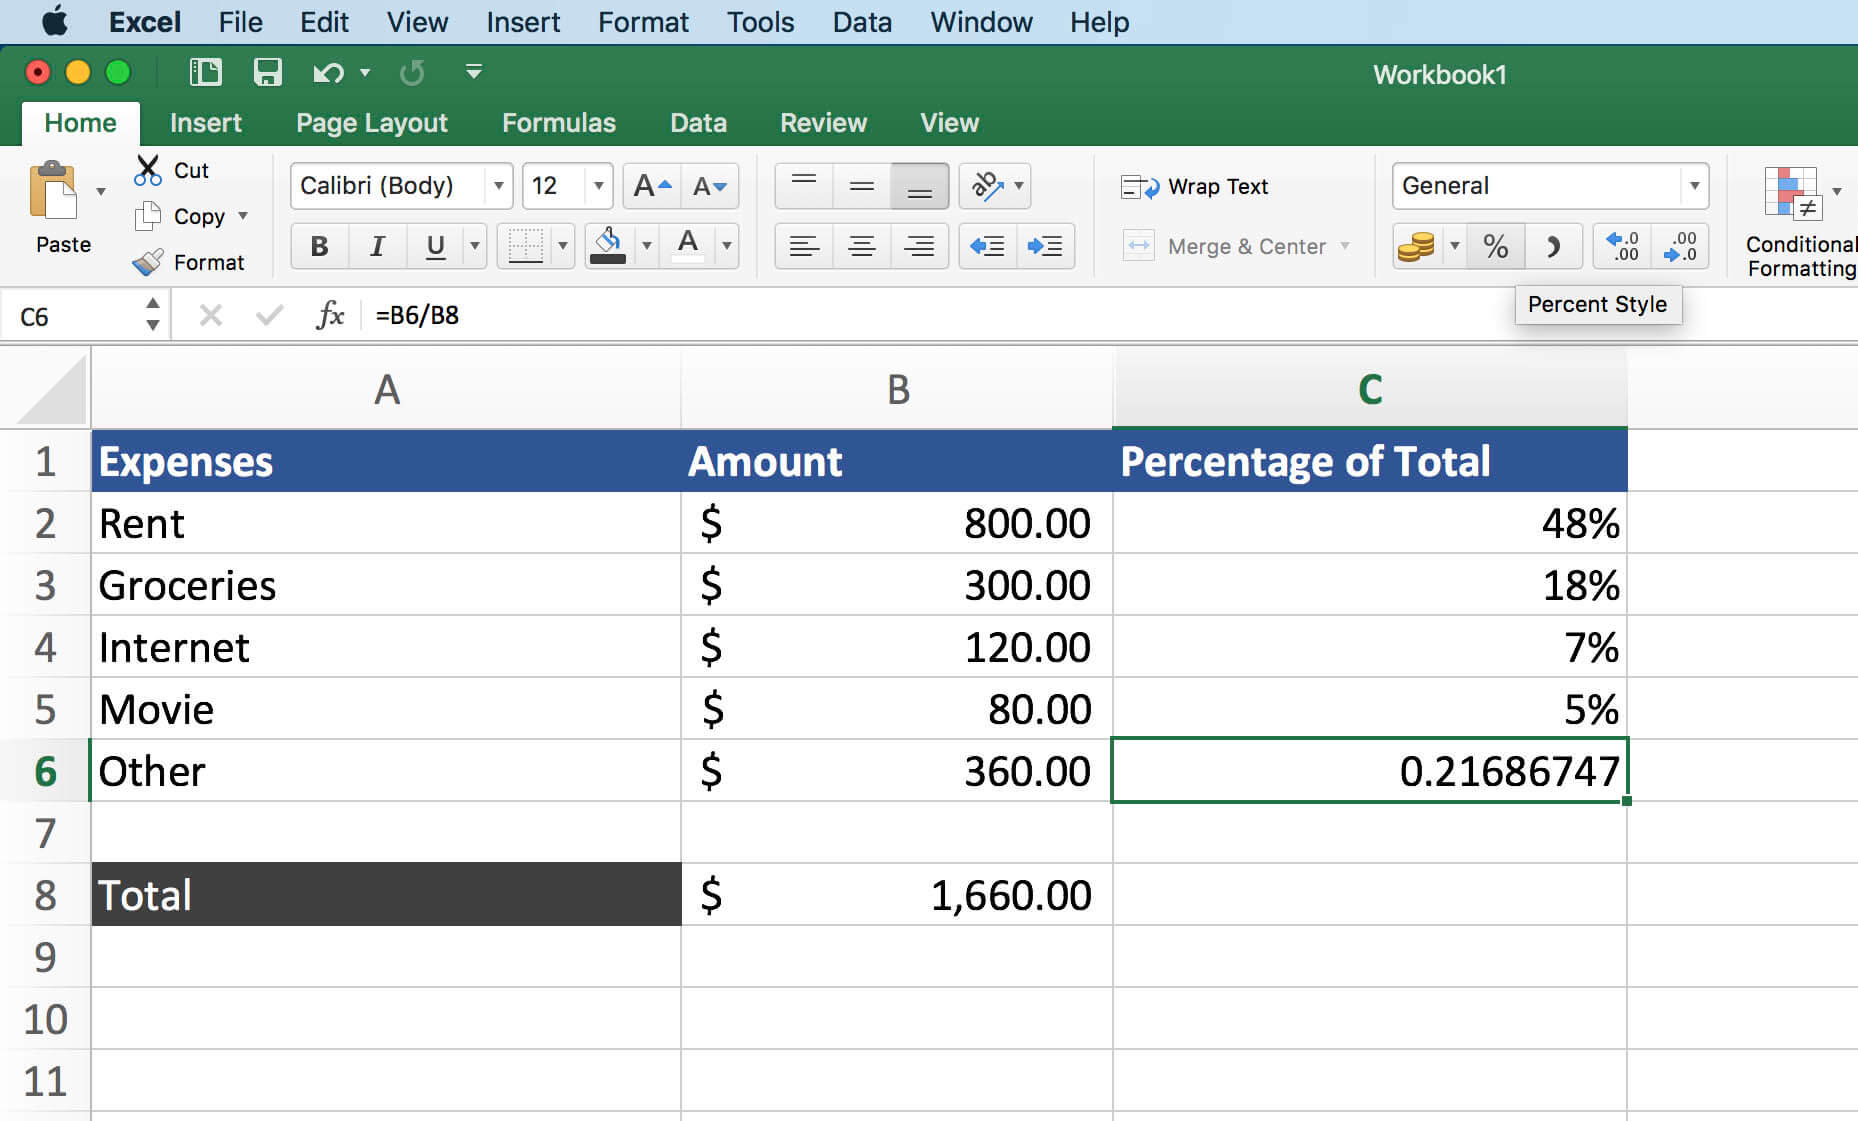 Formula for Percentage of Total in Excel